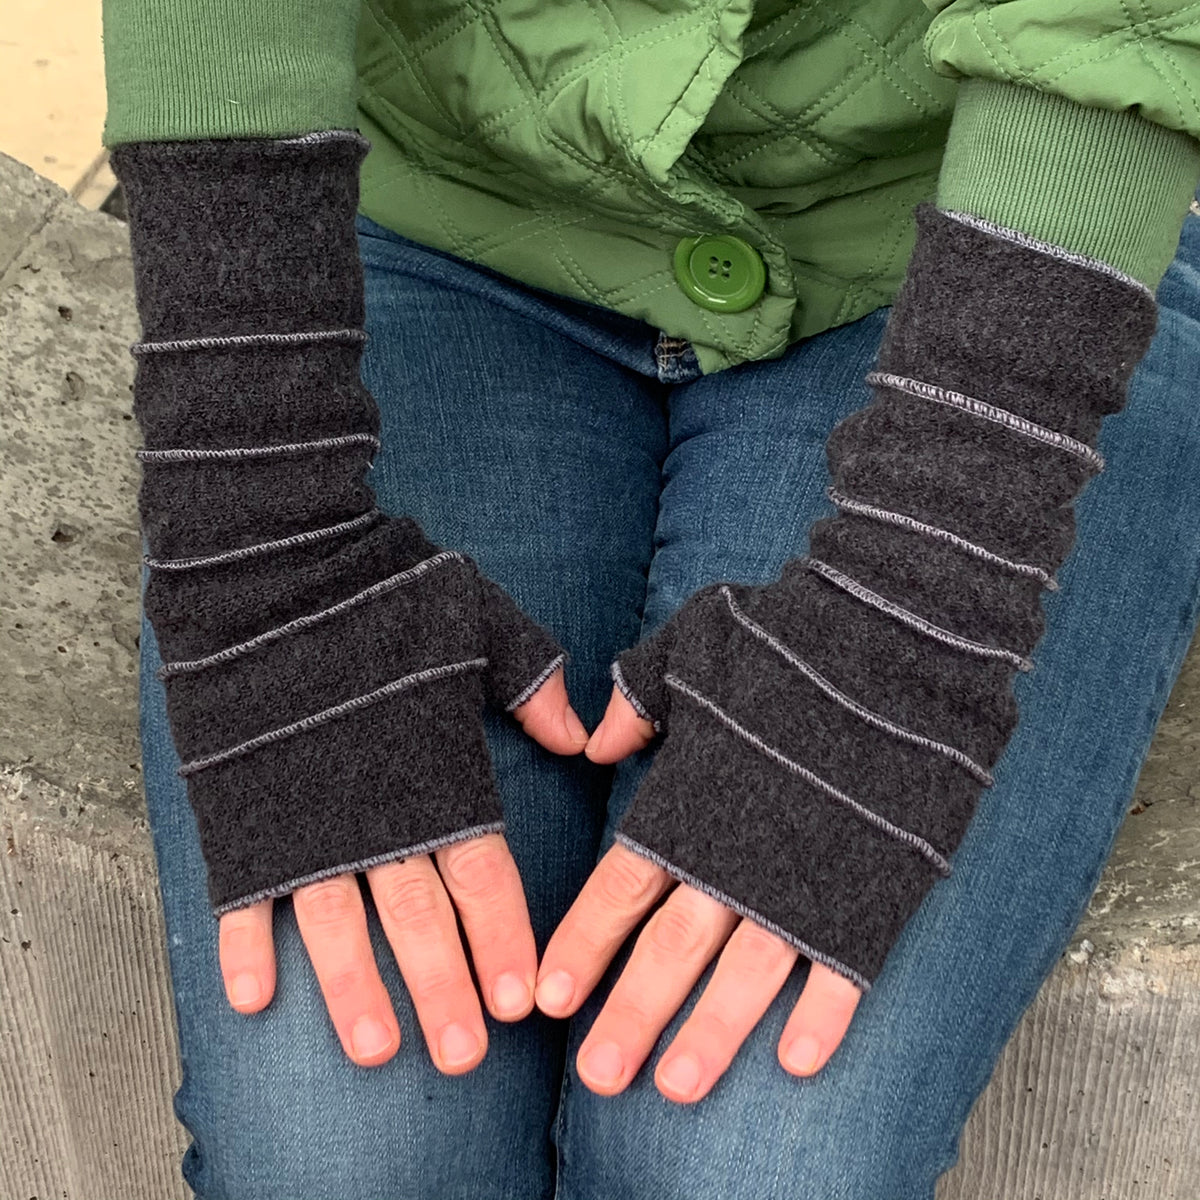 Grey Fingerless Gloves, Long Arm Warmers, Wrist Warmers, Texting